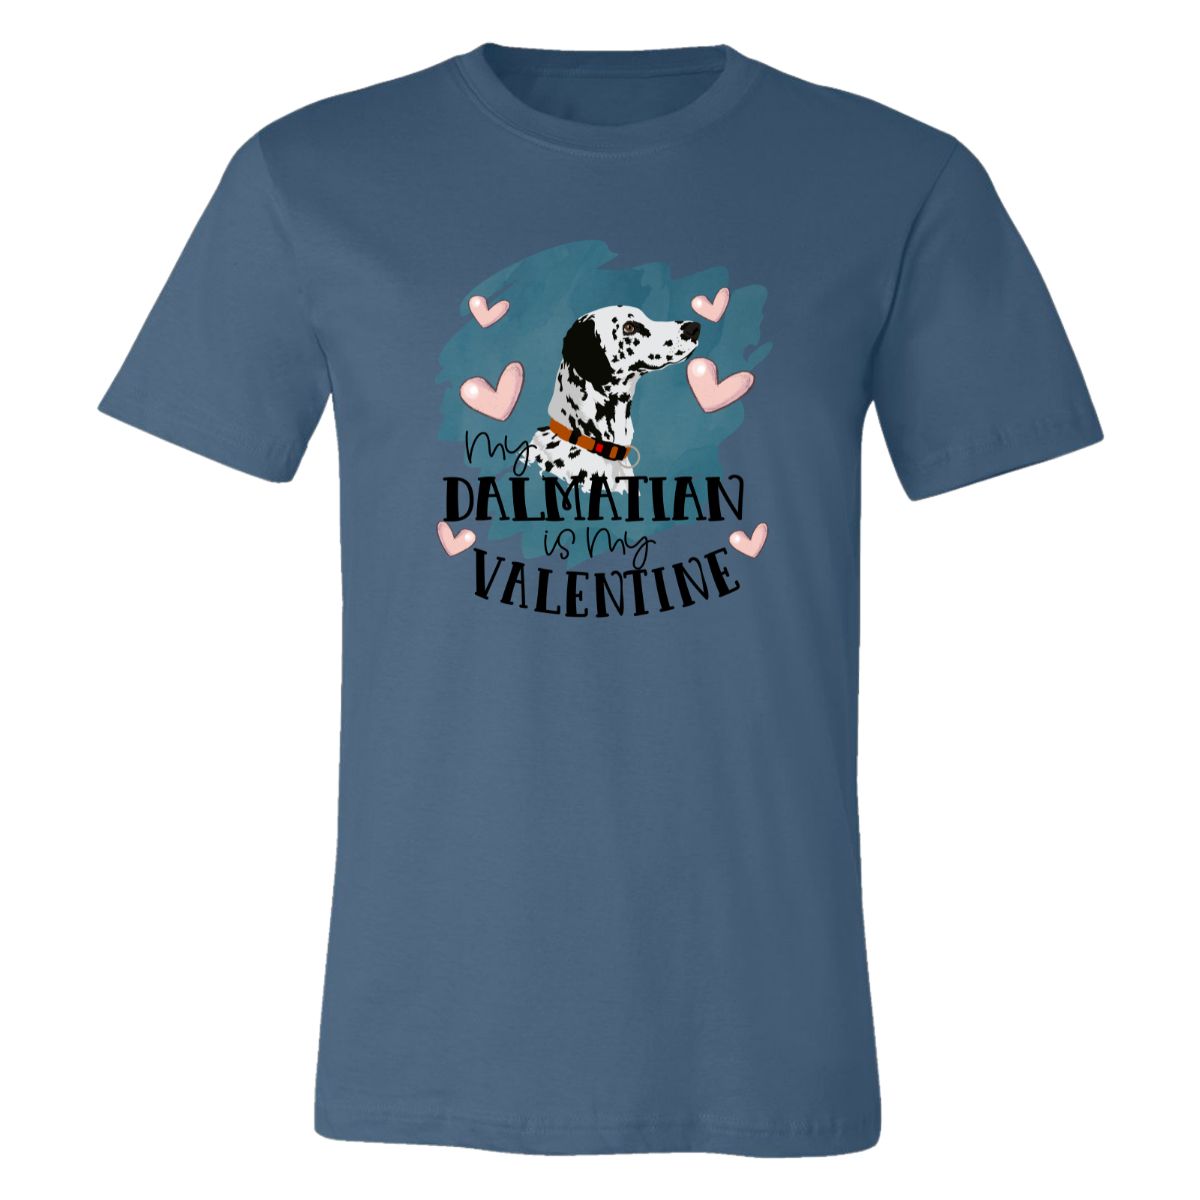 My Dalmatian is My Valentine Design